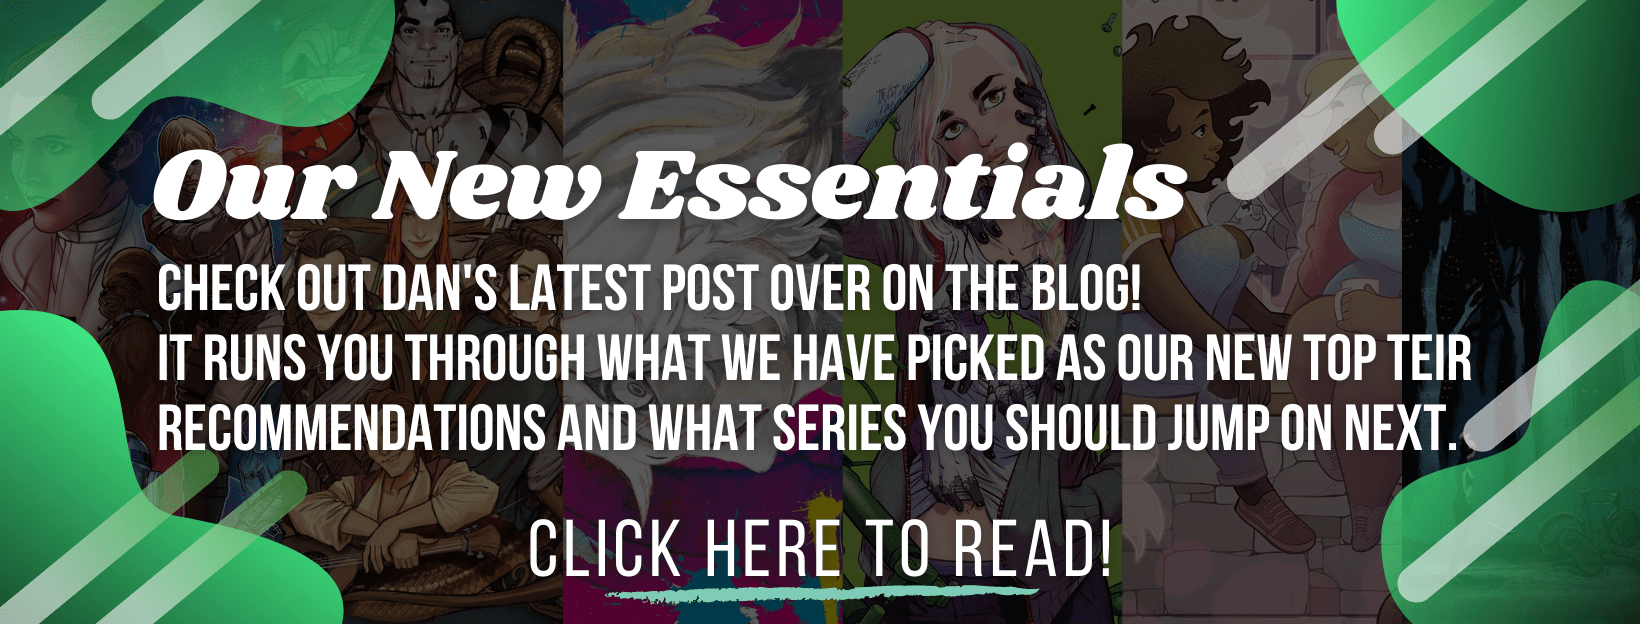 The New Essentials Blog Post